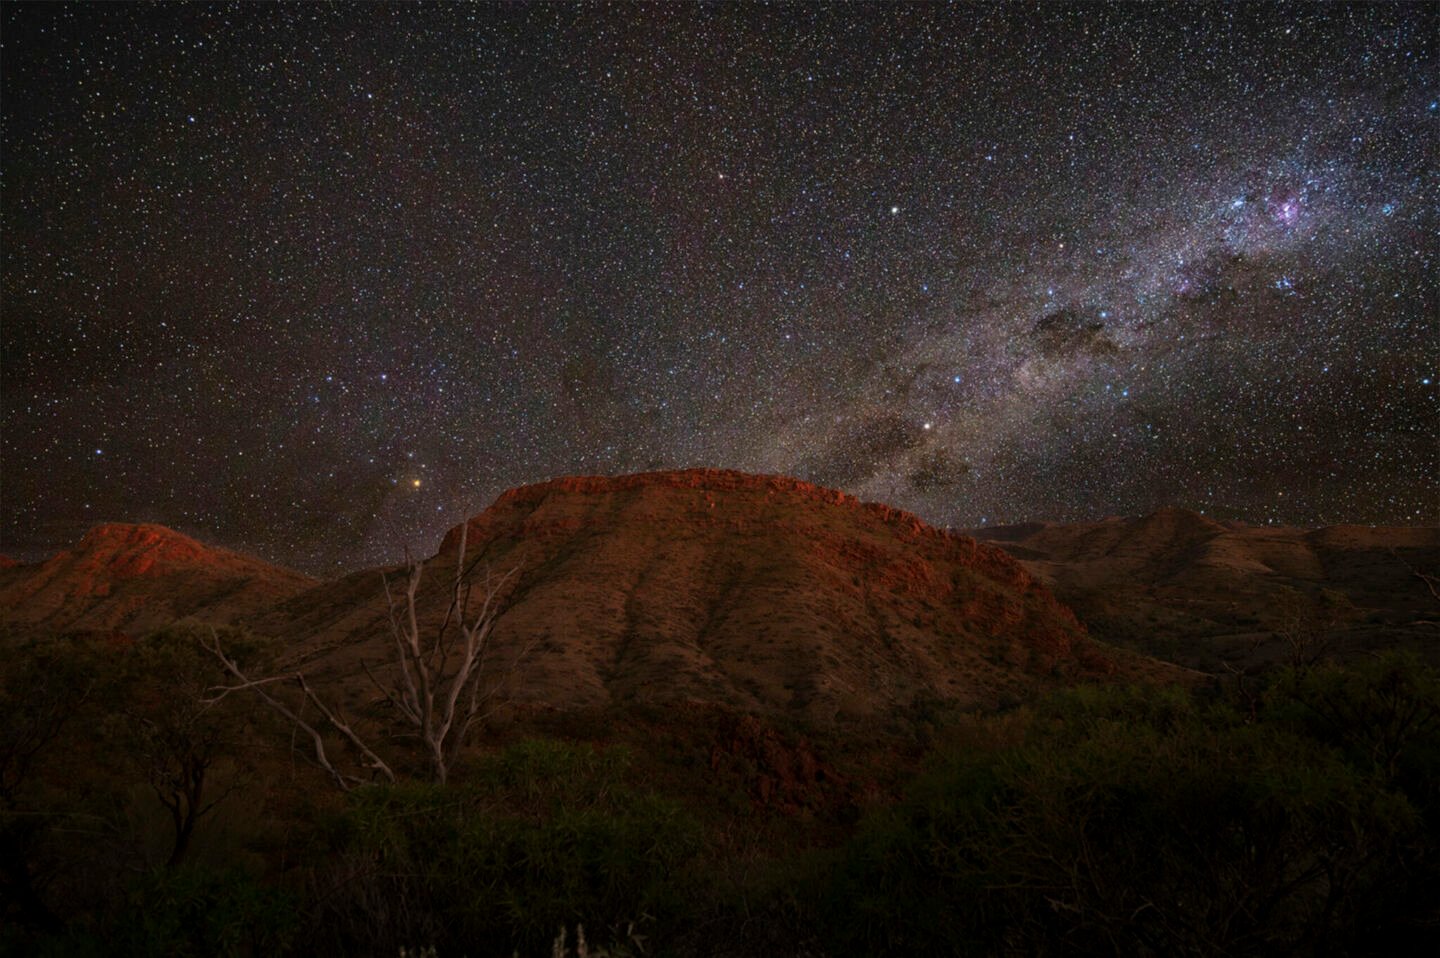 ARKAROOLA WILDERNESS SANCTUARY, Flinders Ranges, South Australia